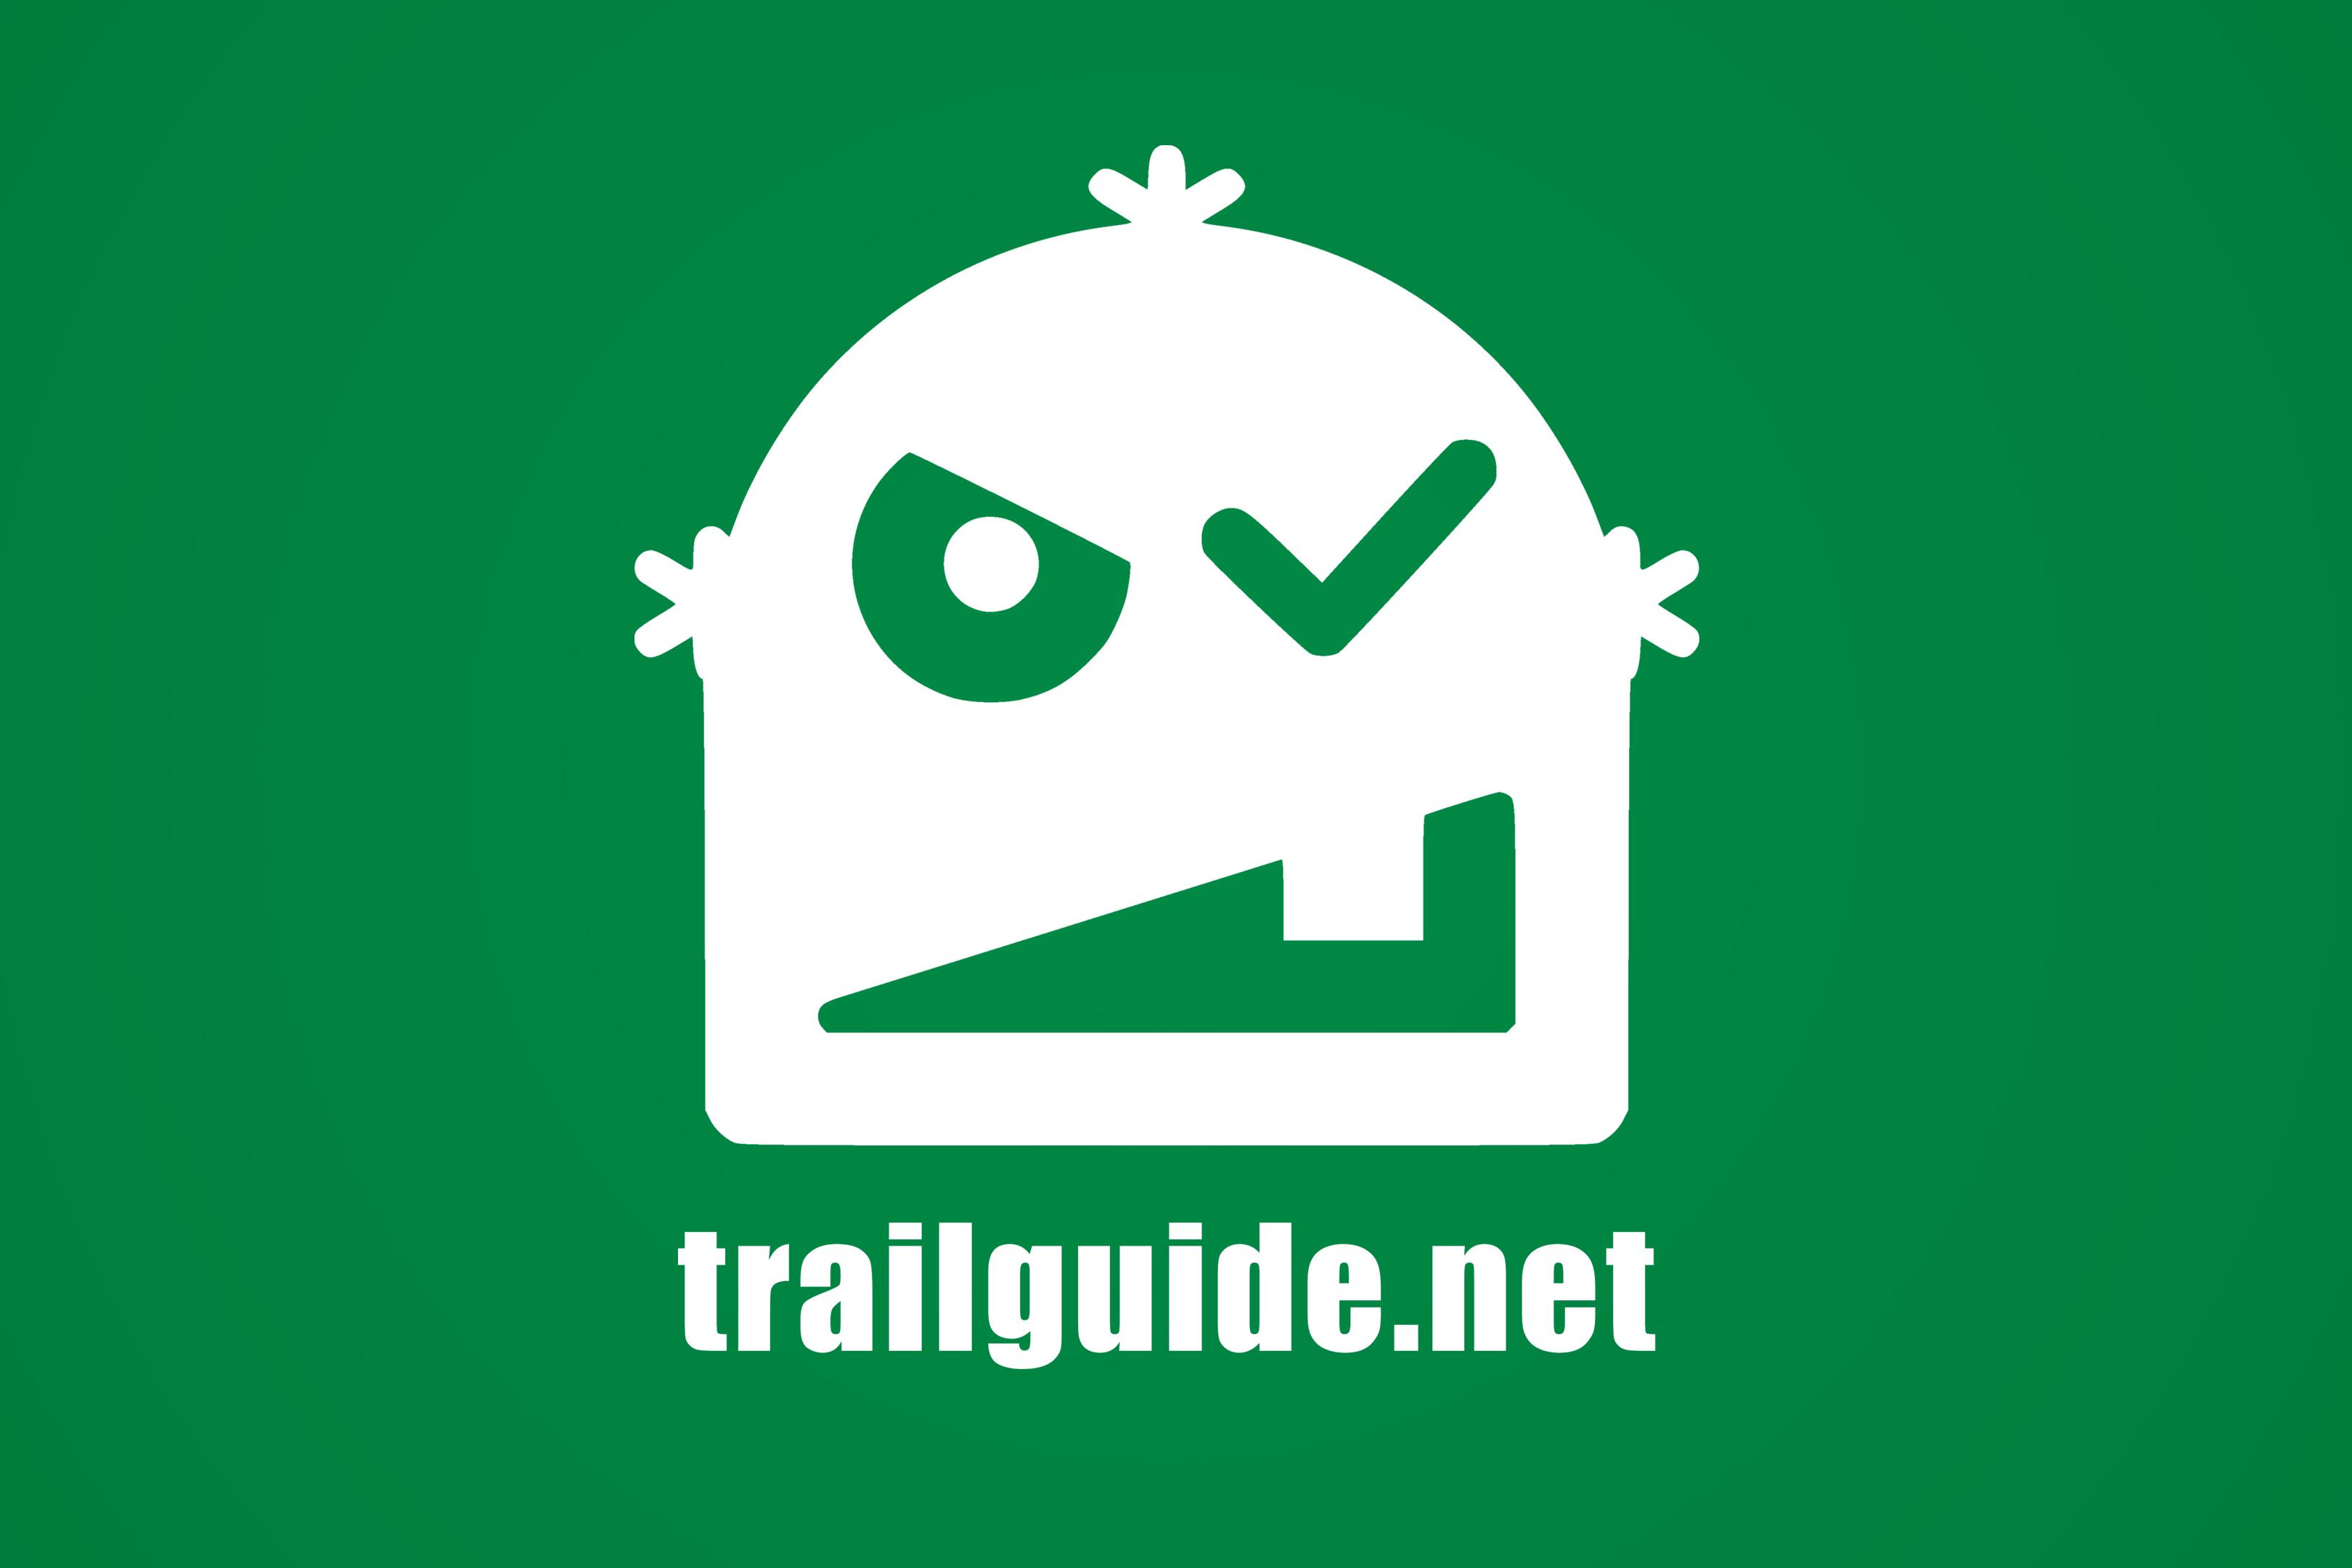 Trailguide.net